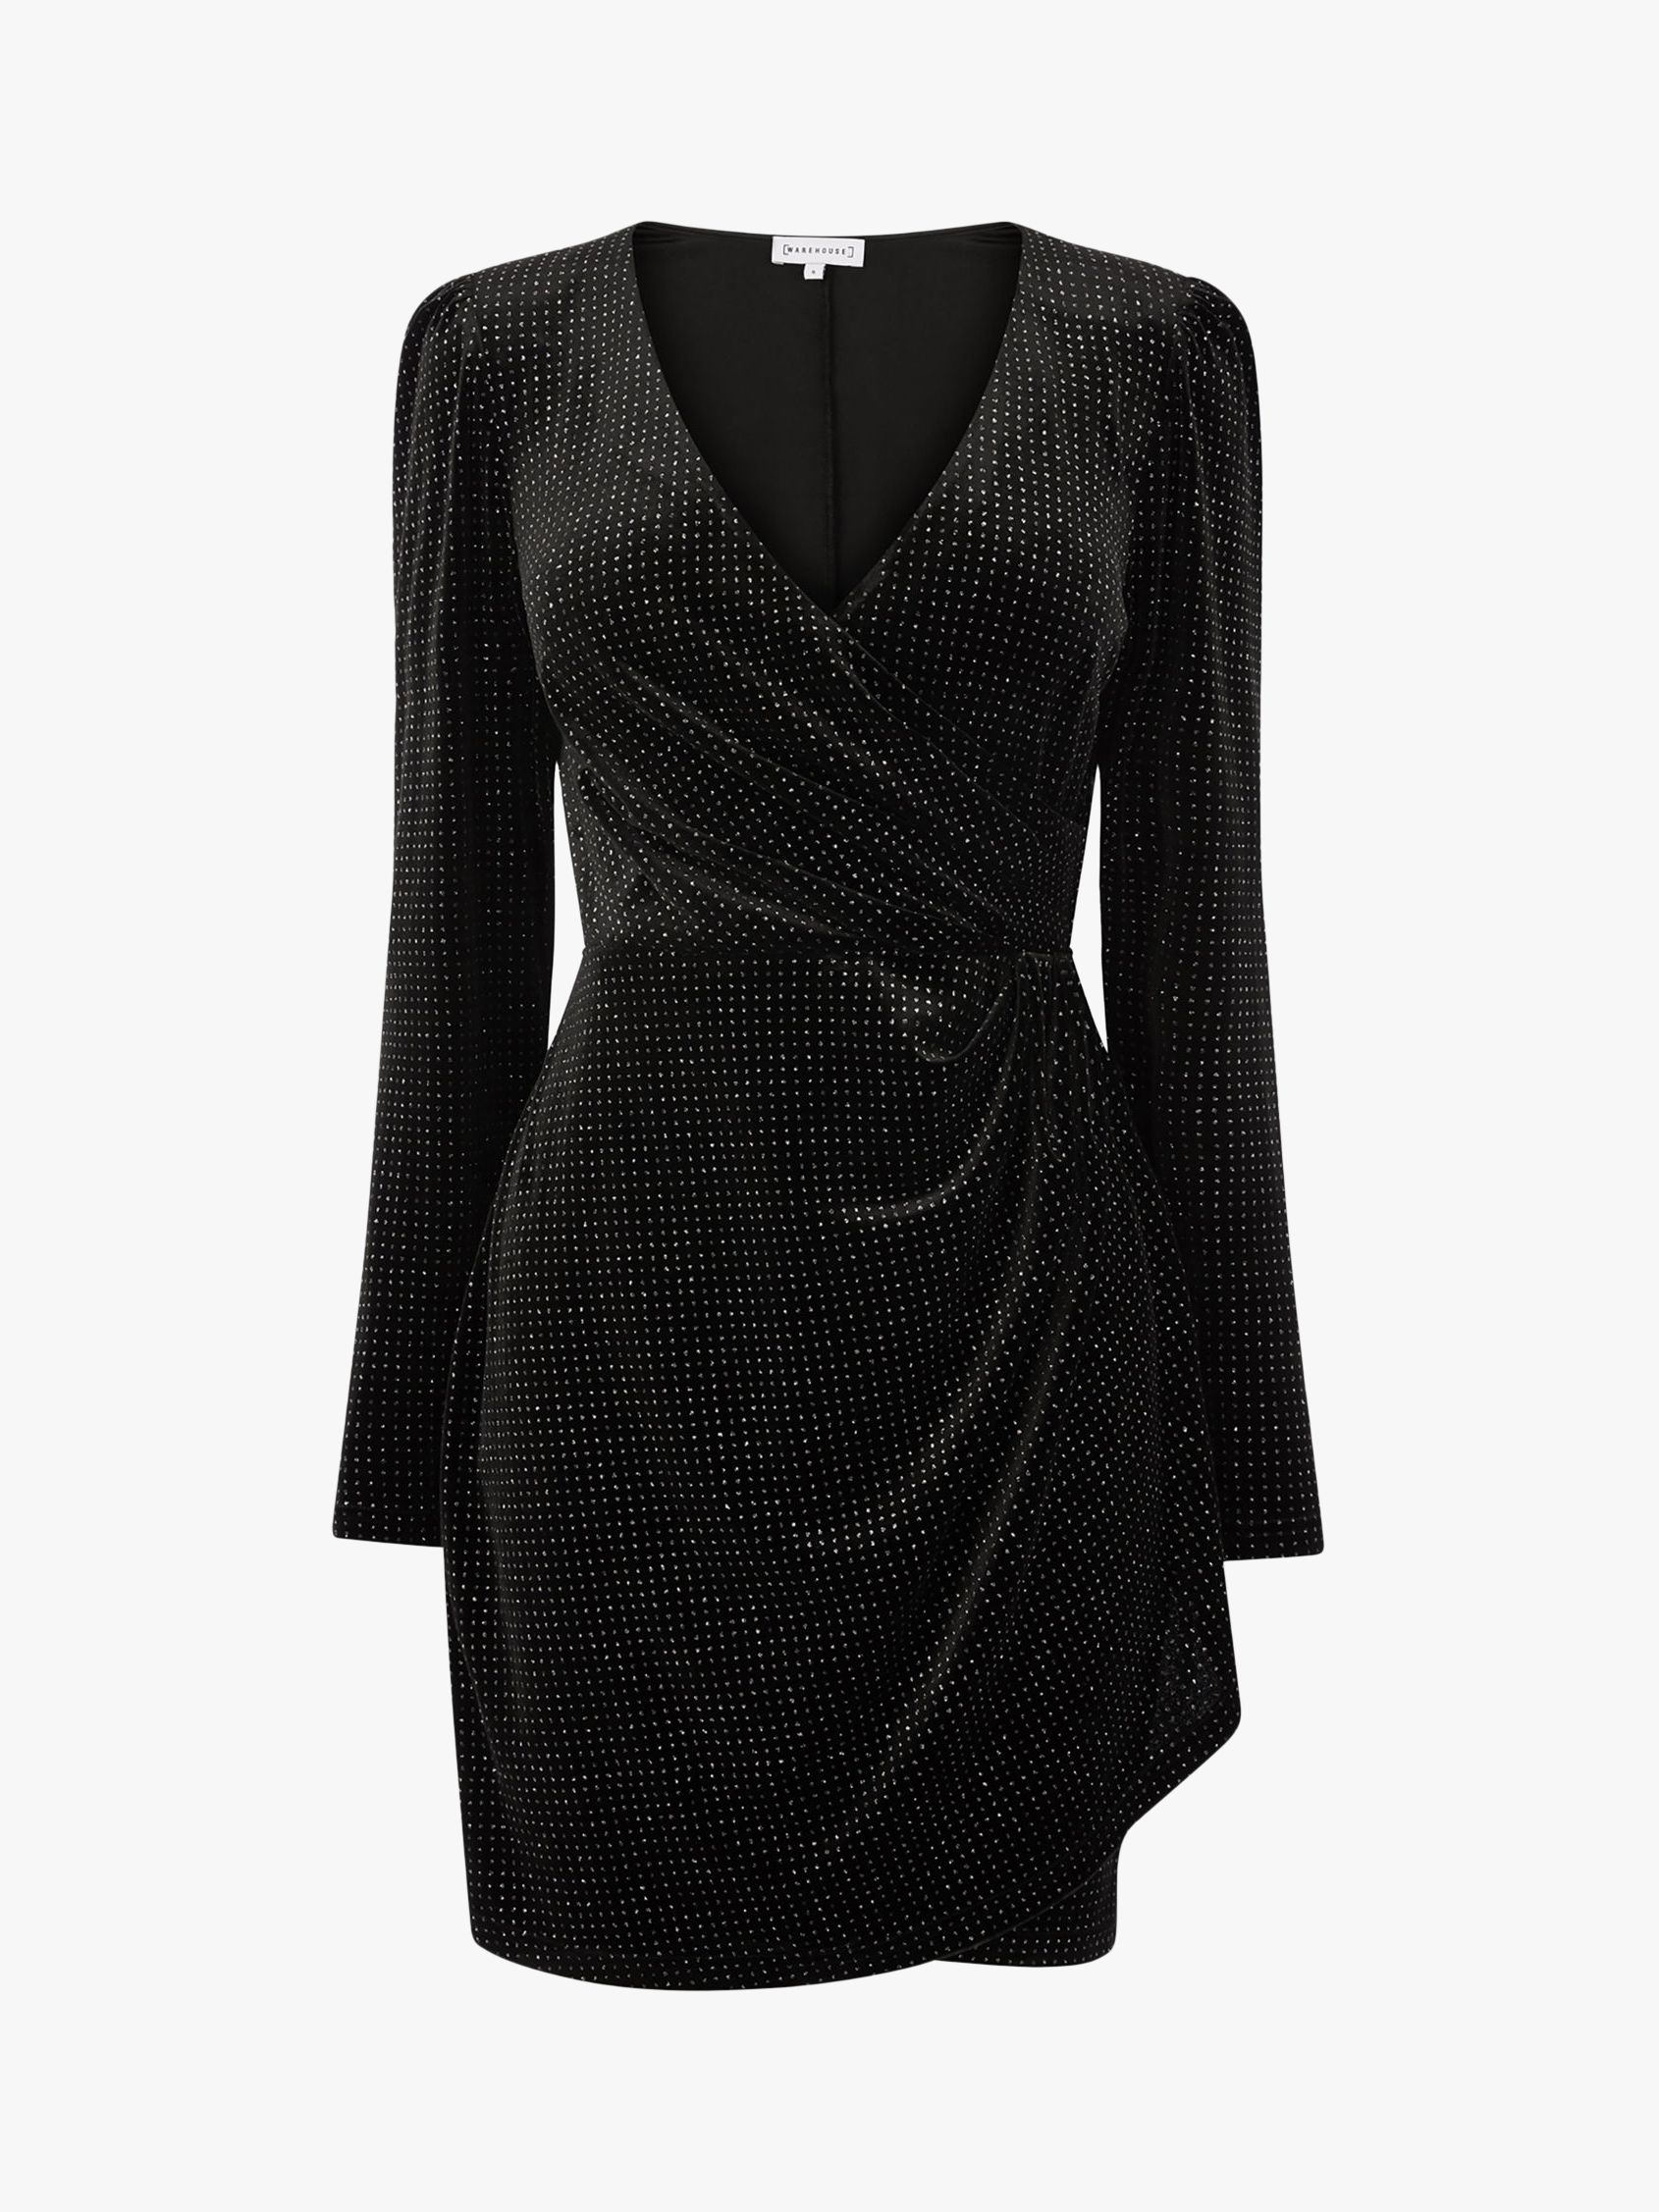 black blazer dress sleeveless